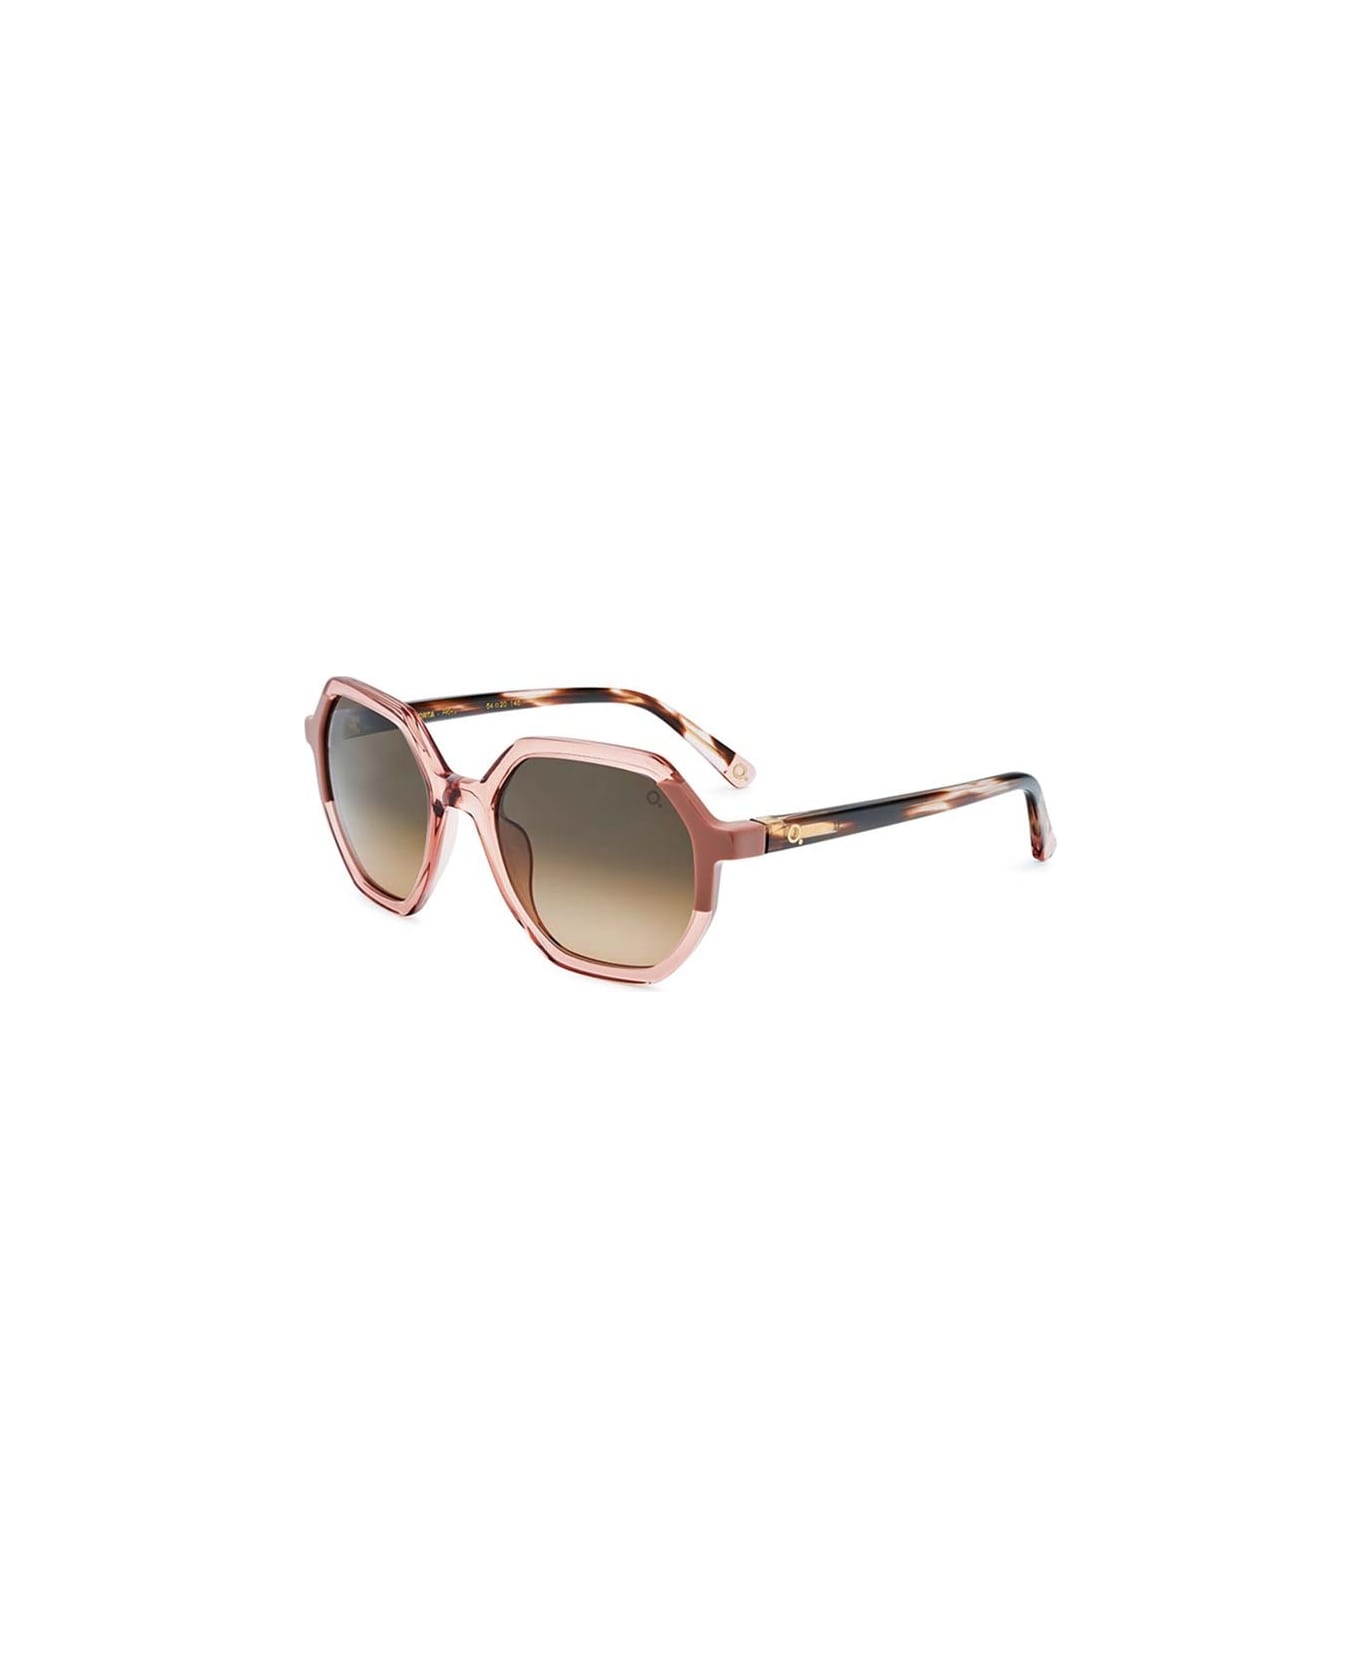 Etnia Barcelona Sunglasses - Rosa/Marrone